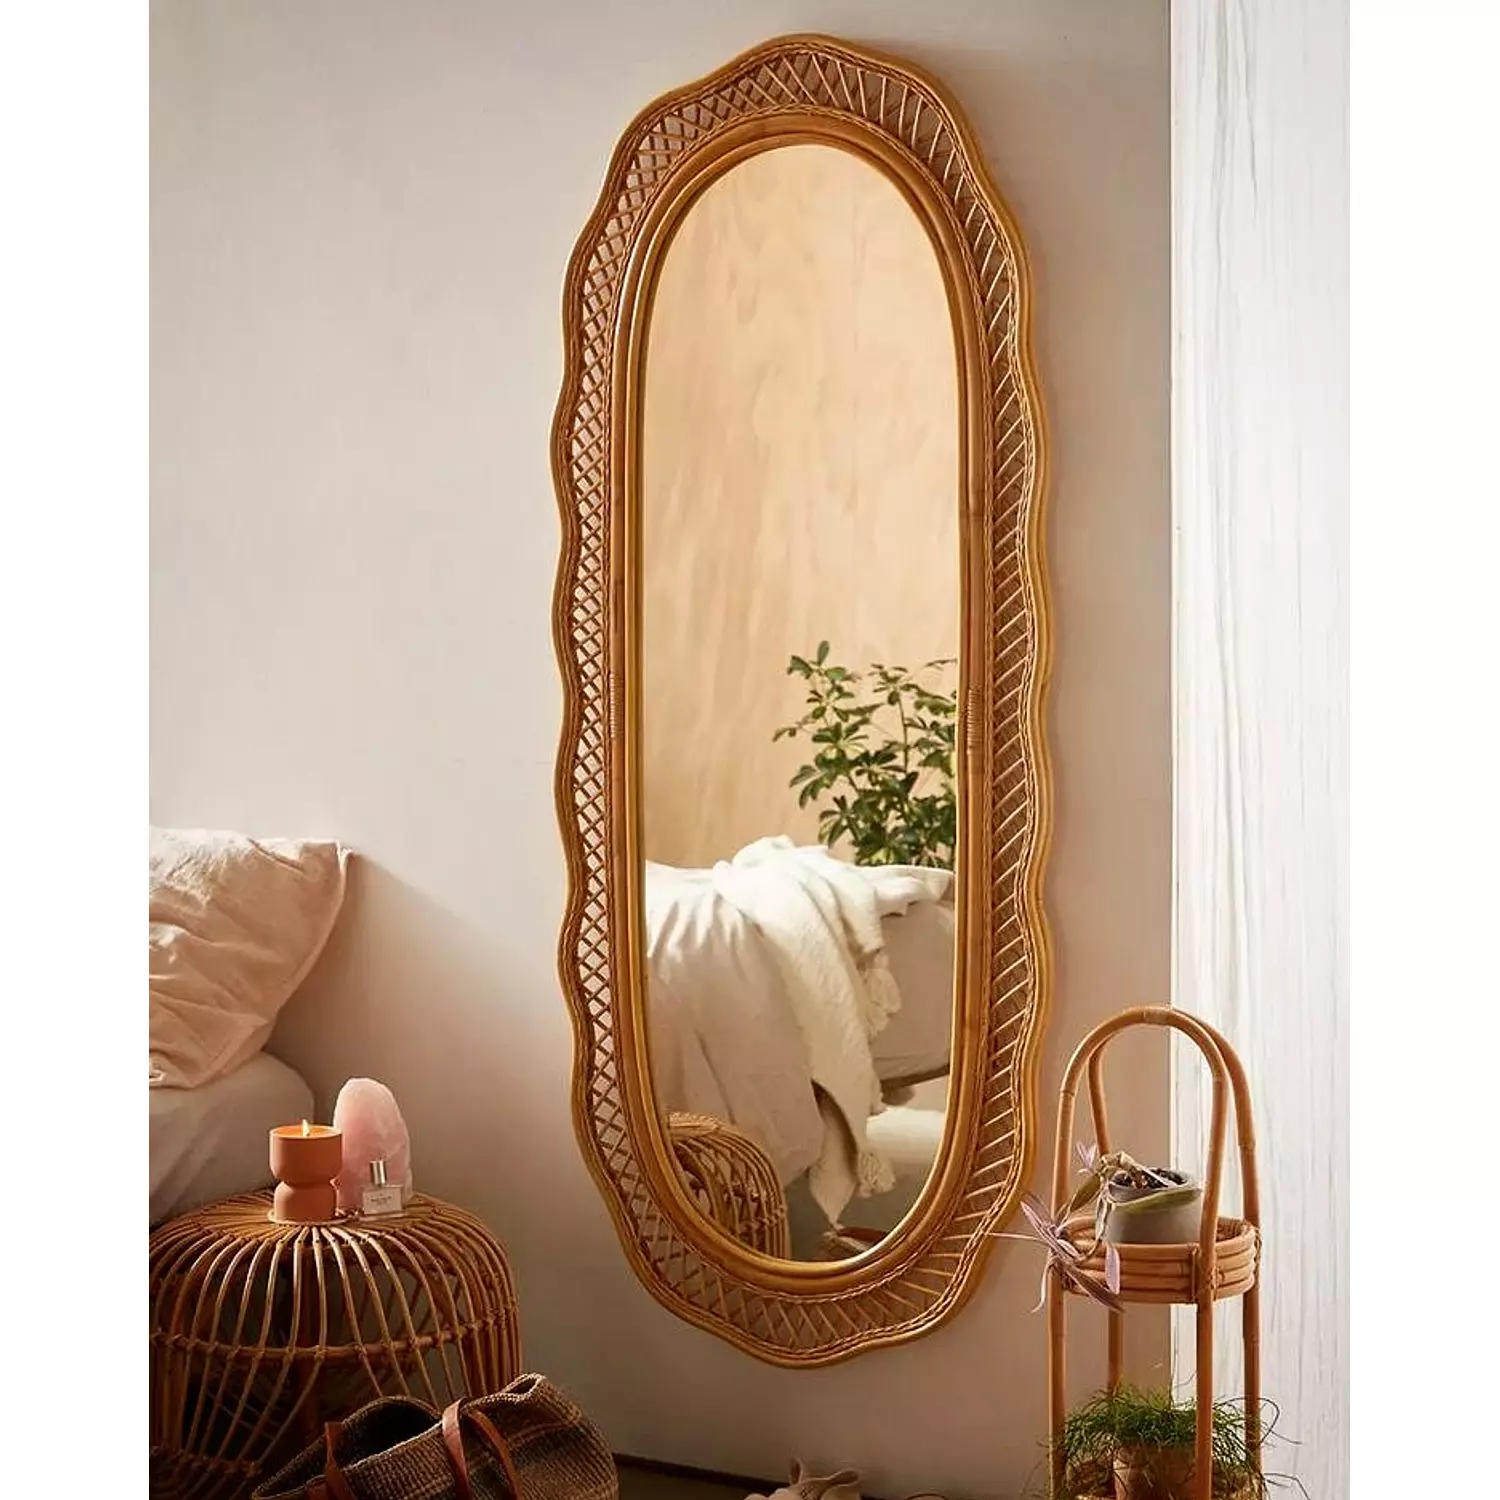 Curvy bamboo mirror hover image